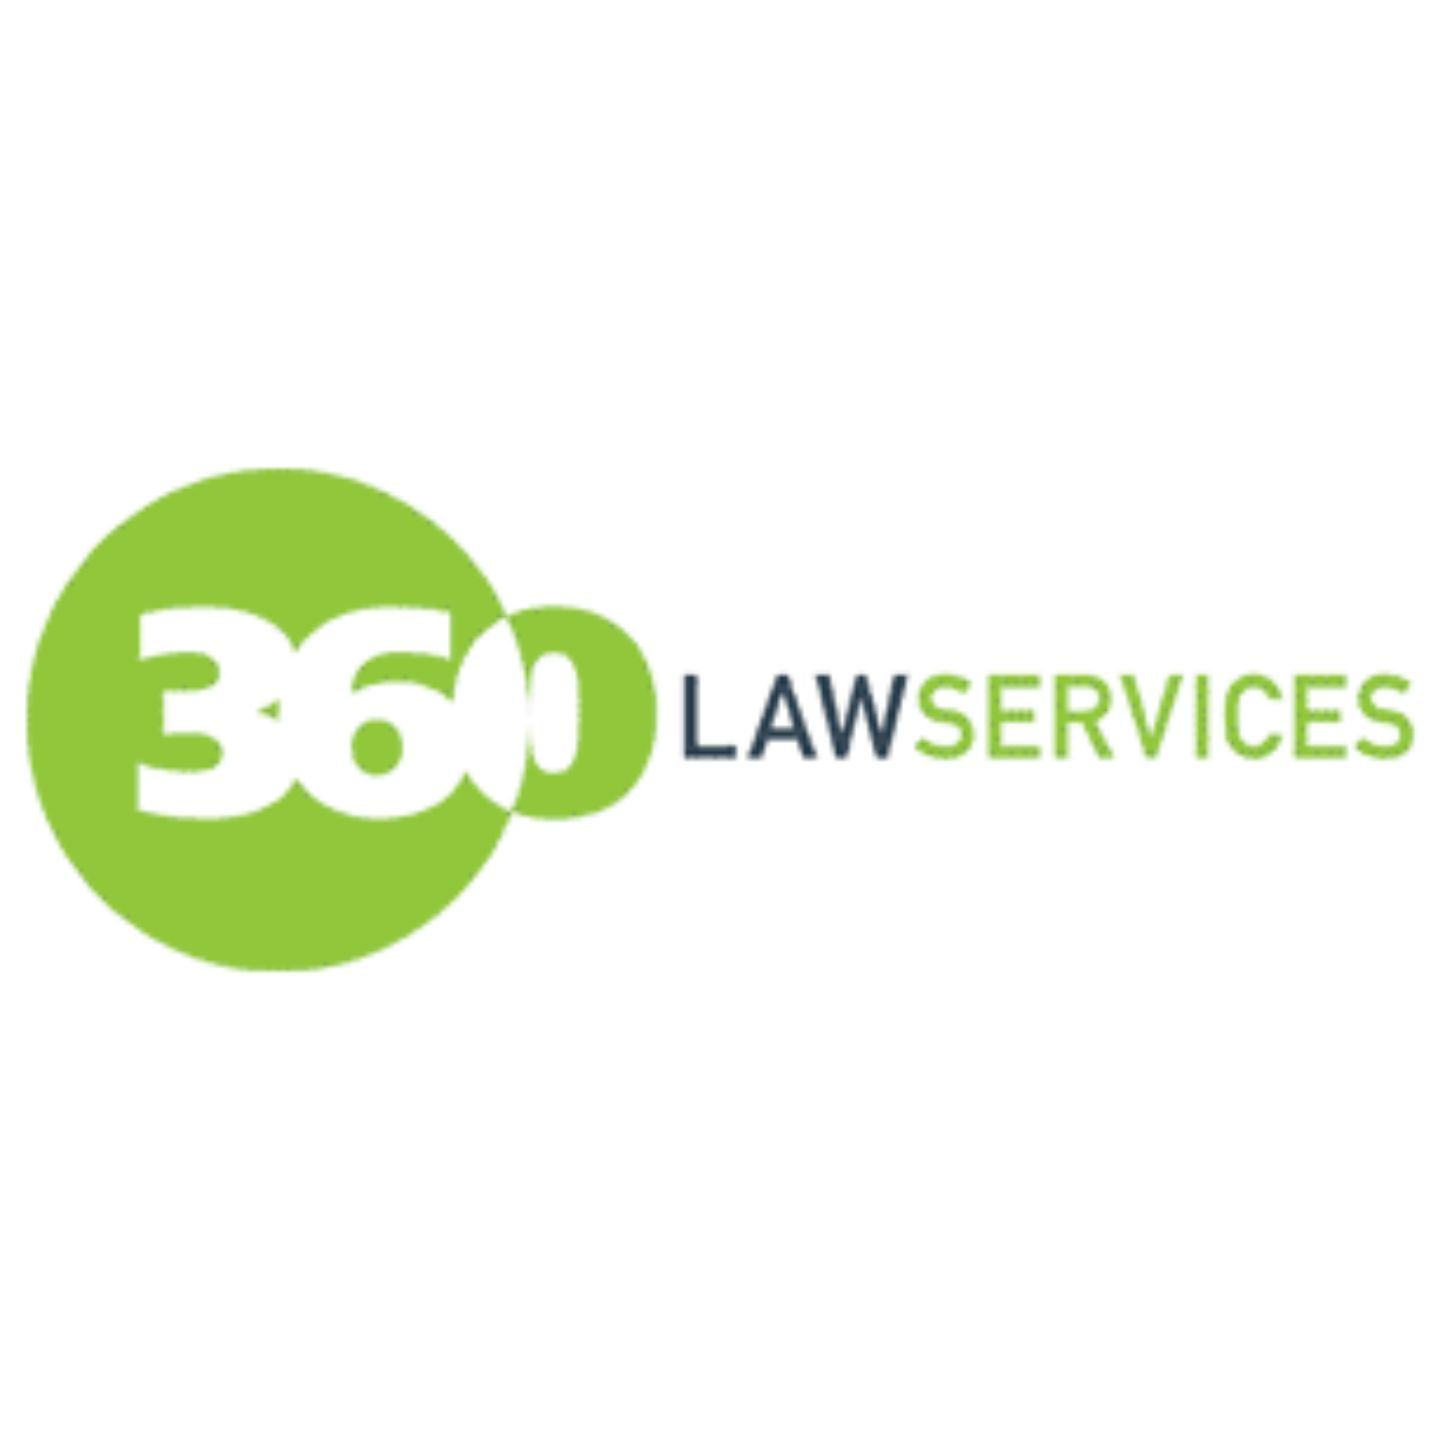 360 Law Services Logo